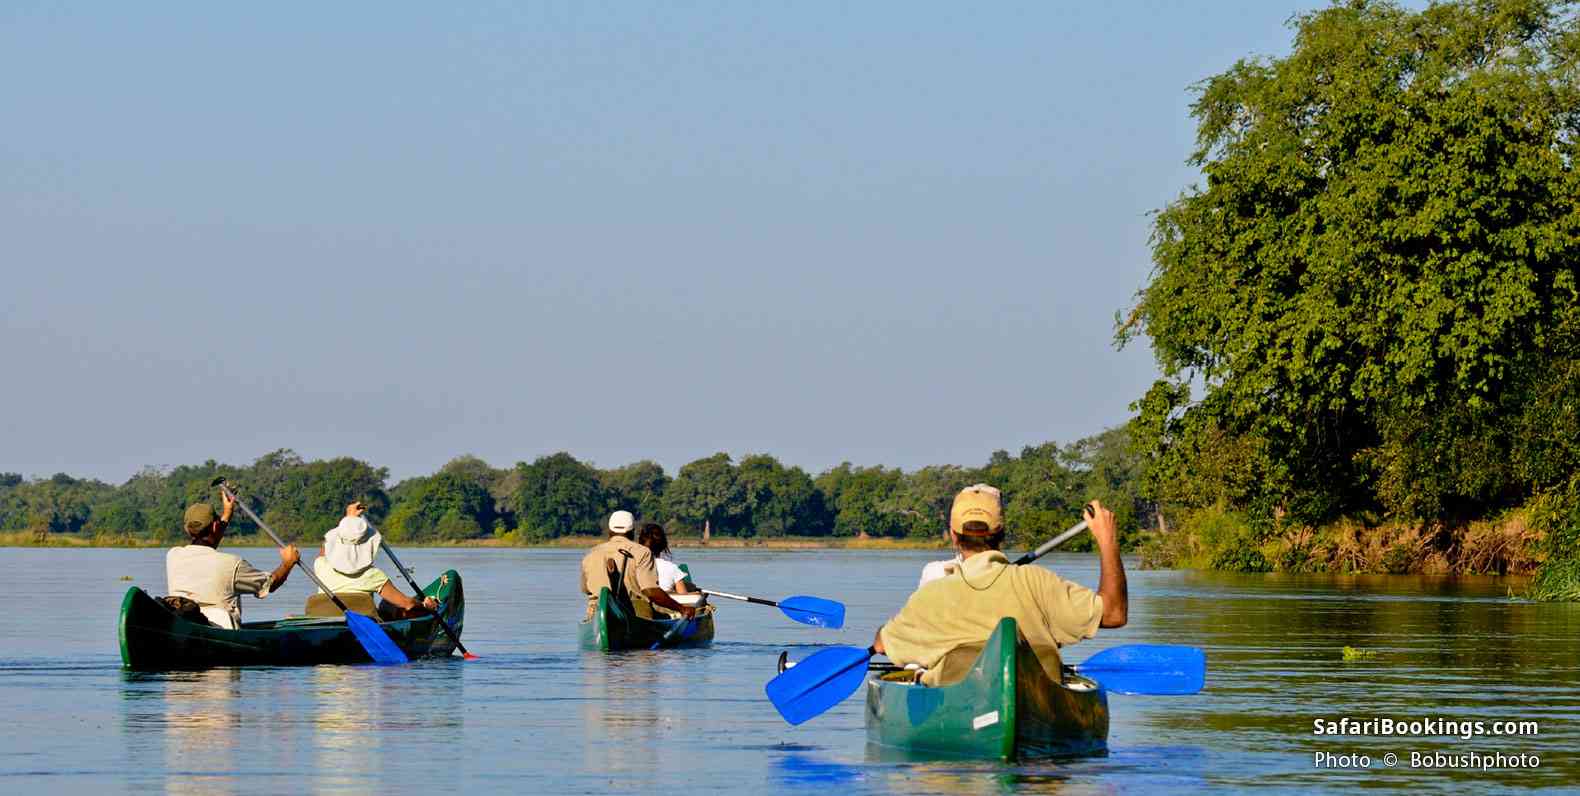 A canoe trip down the Zambezi River